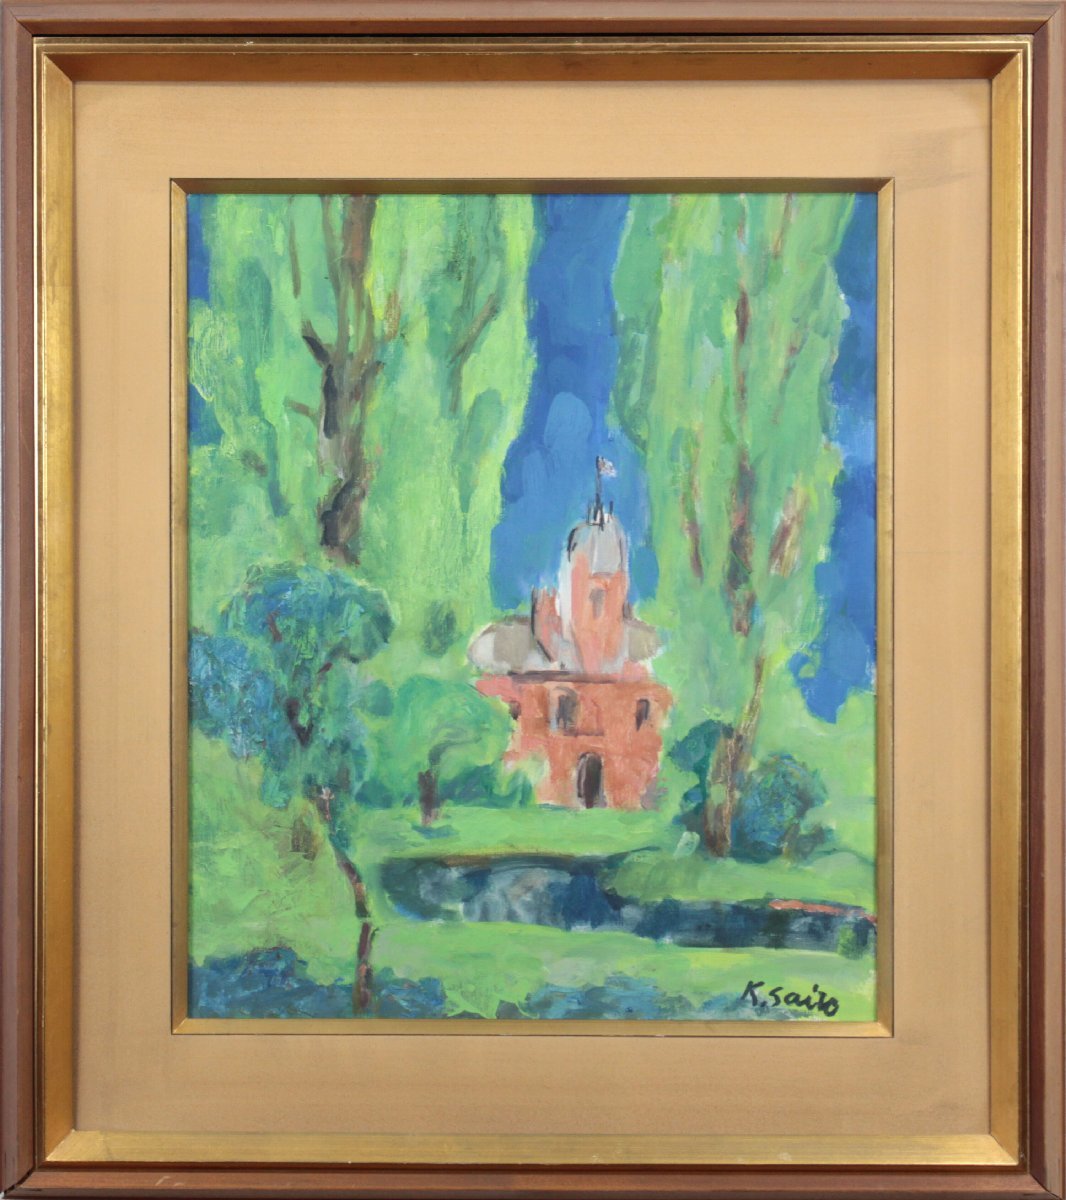 Saito Koichi Provincial Office in Fresh Green Oil Painting Framed Painting [Hokkaido Gallery], Painting, Oil painting, Nature, Landscape painting